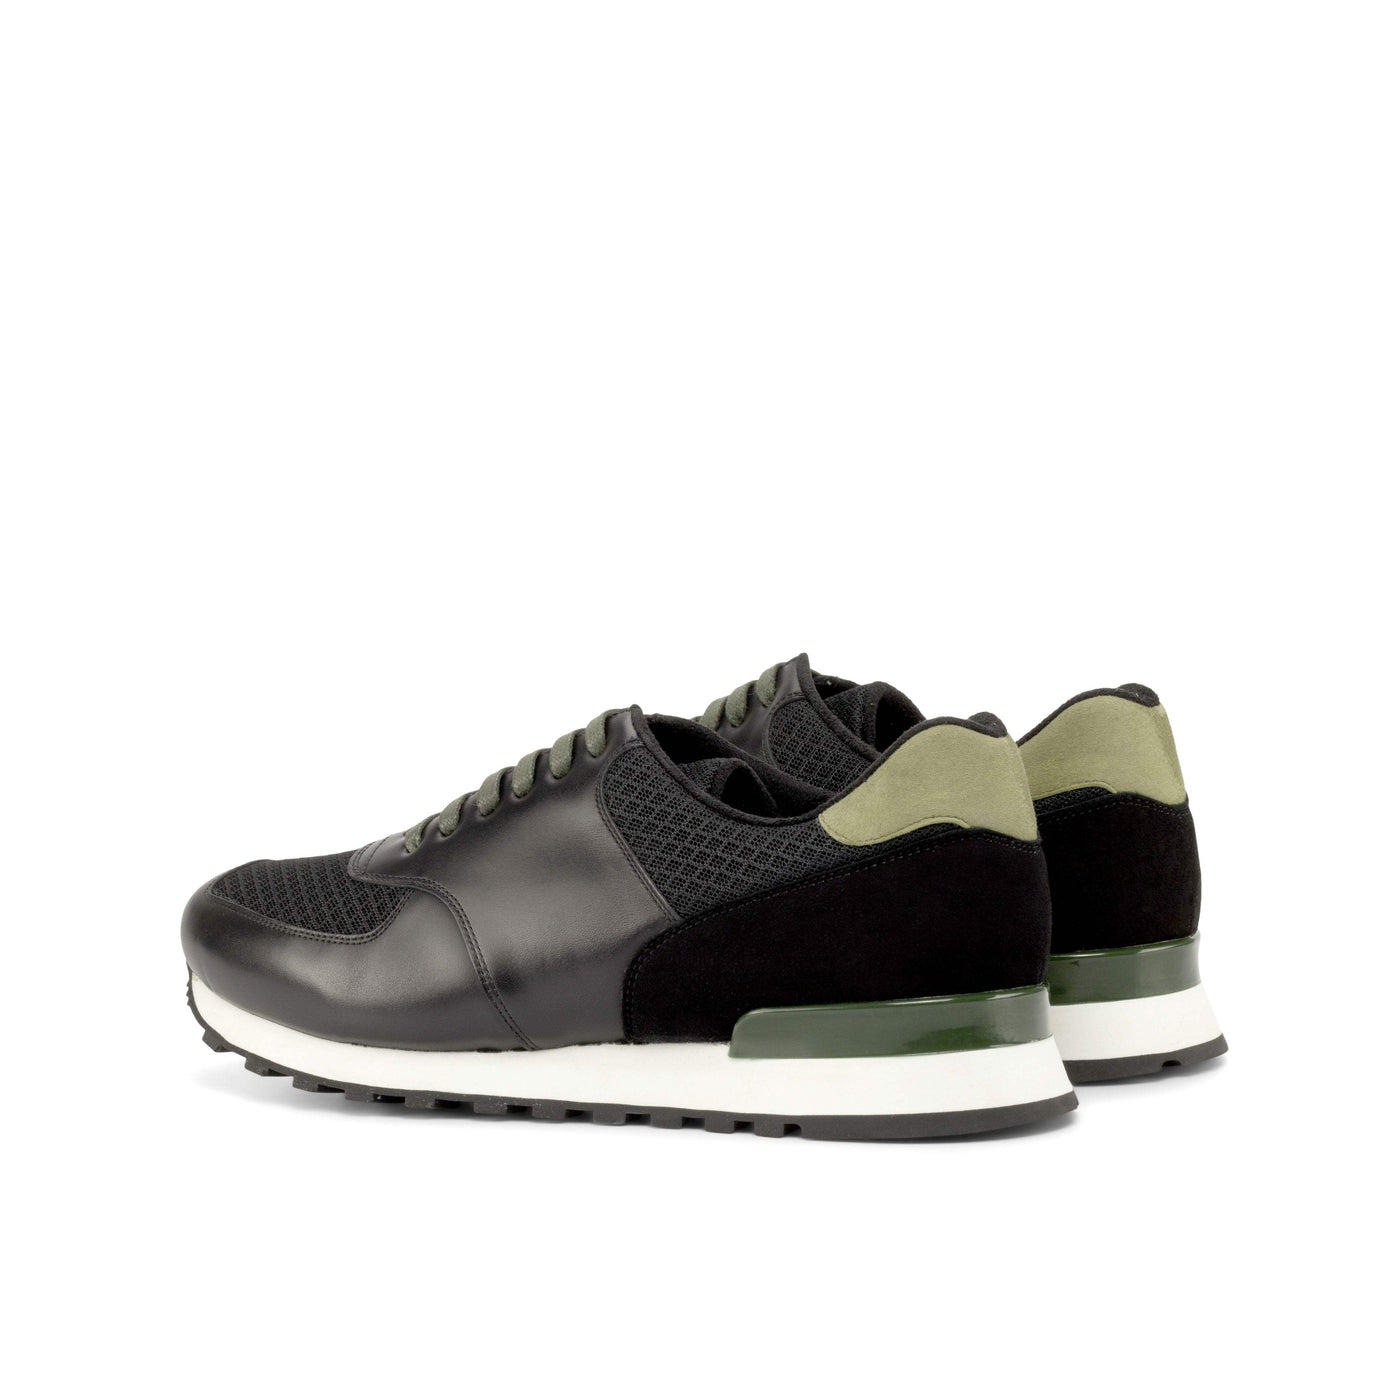 Men's Jogger Sneakers Leather Black Green 4880 4- MERRIMIUM